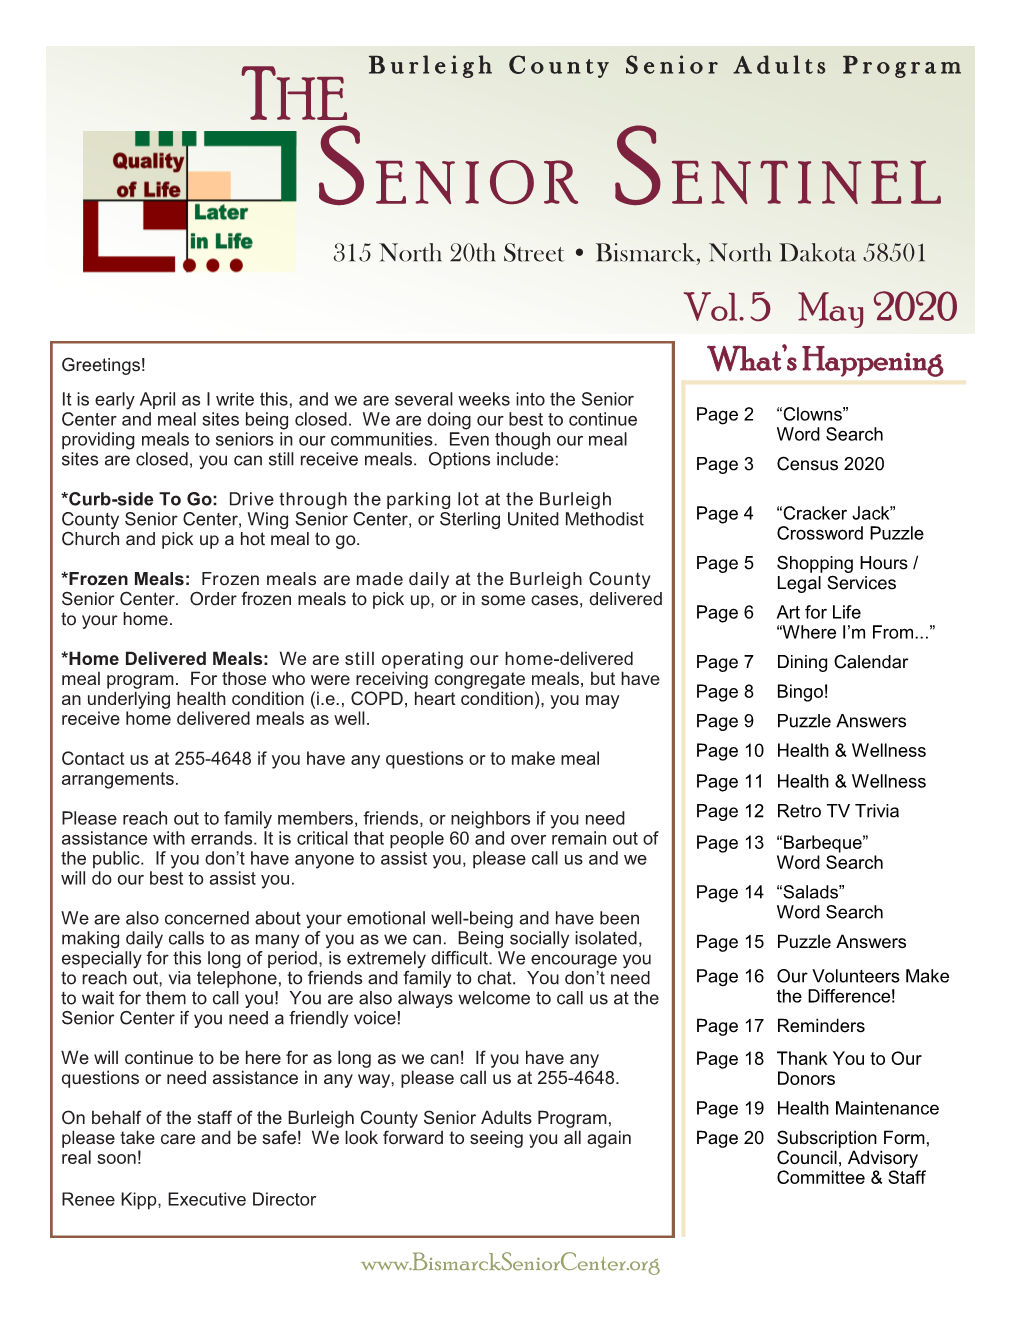 The Senior Sentinel | 3 “Cracker Jack” Crossword Puzzle